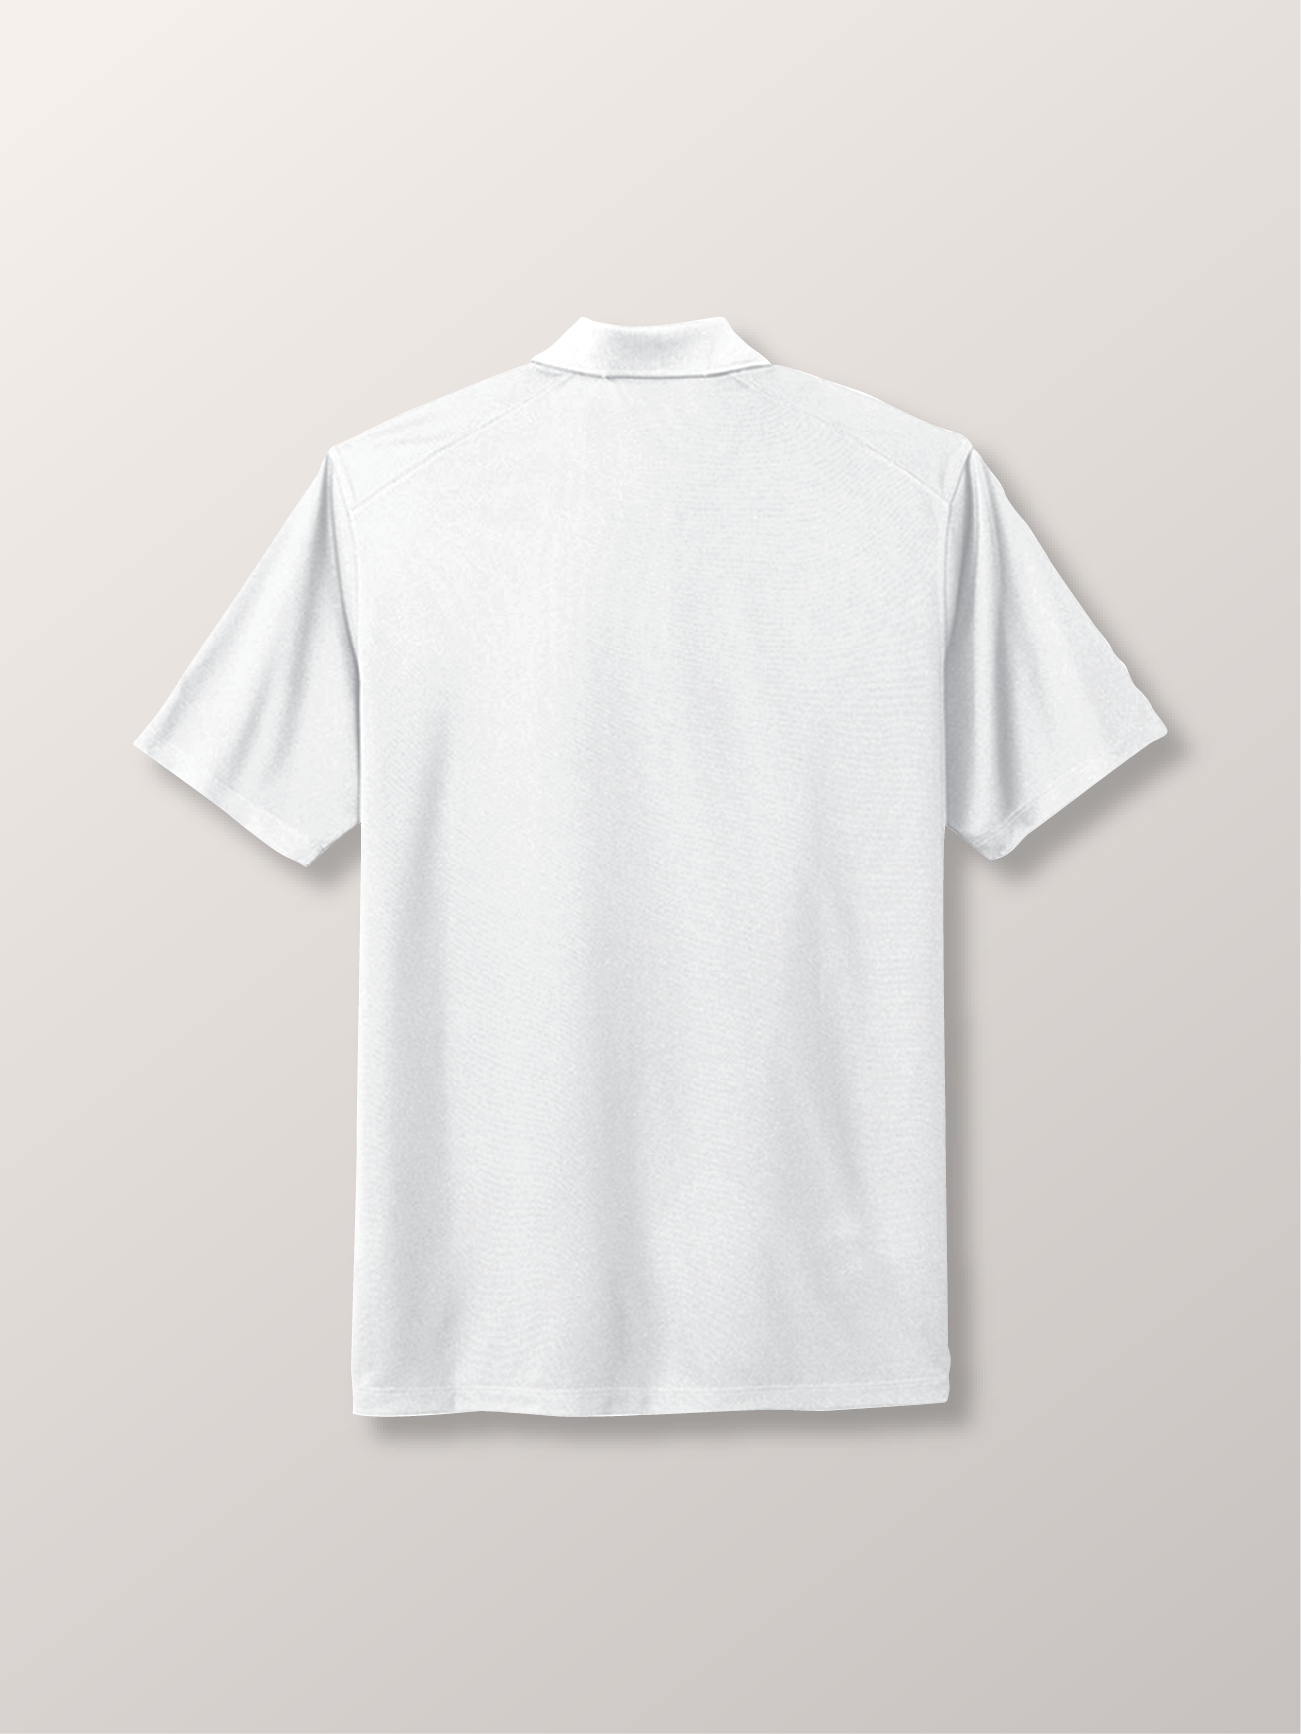 LAX World x Nike - Dri-fit Micro-pique White Lacrosse Polo Shirt- White Black 